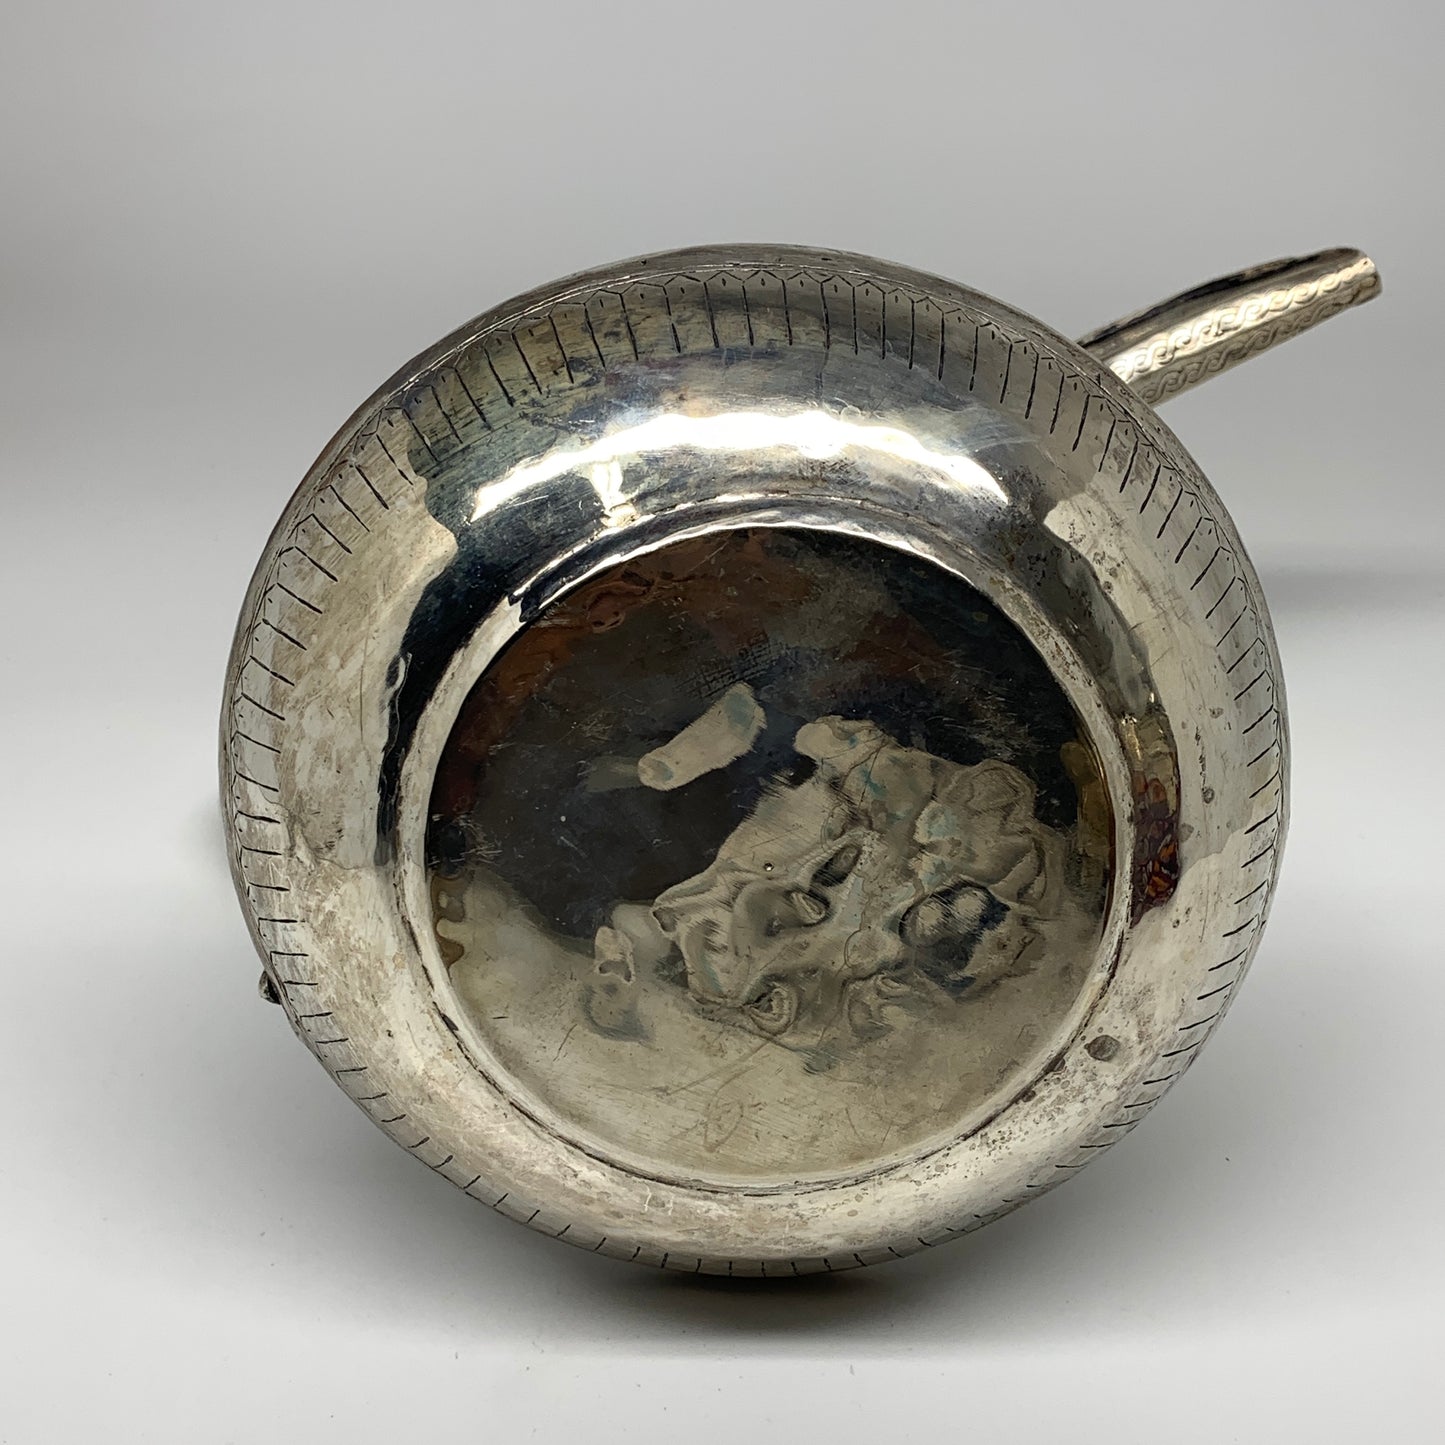 1550g,15"x8.5" Handmade Antique Pitcher Ewer Brass/Copper @Afghanistan, P147